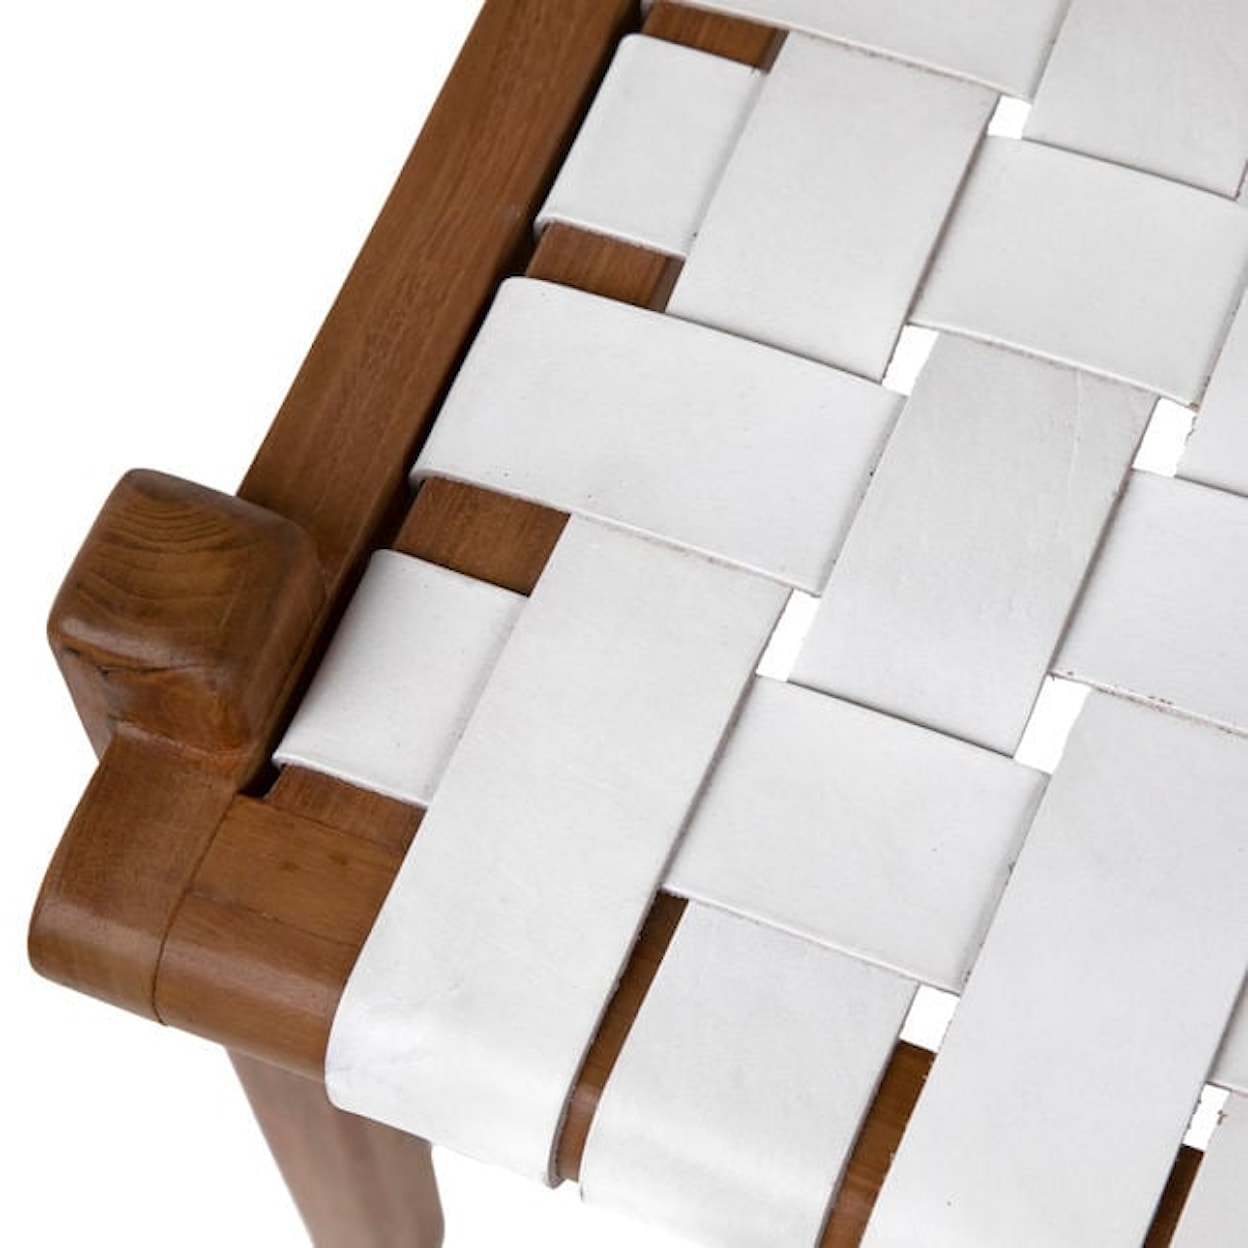 Dovetail Furniture Salazar Salazar Bench with Back